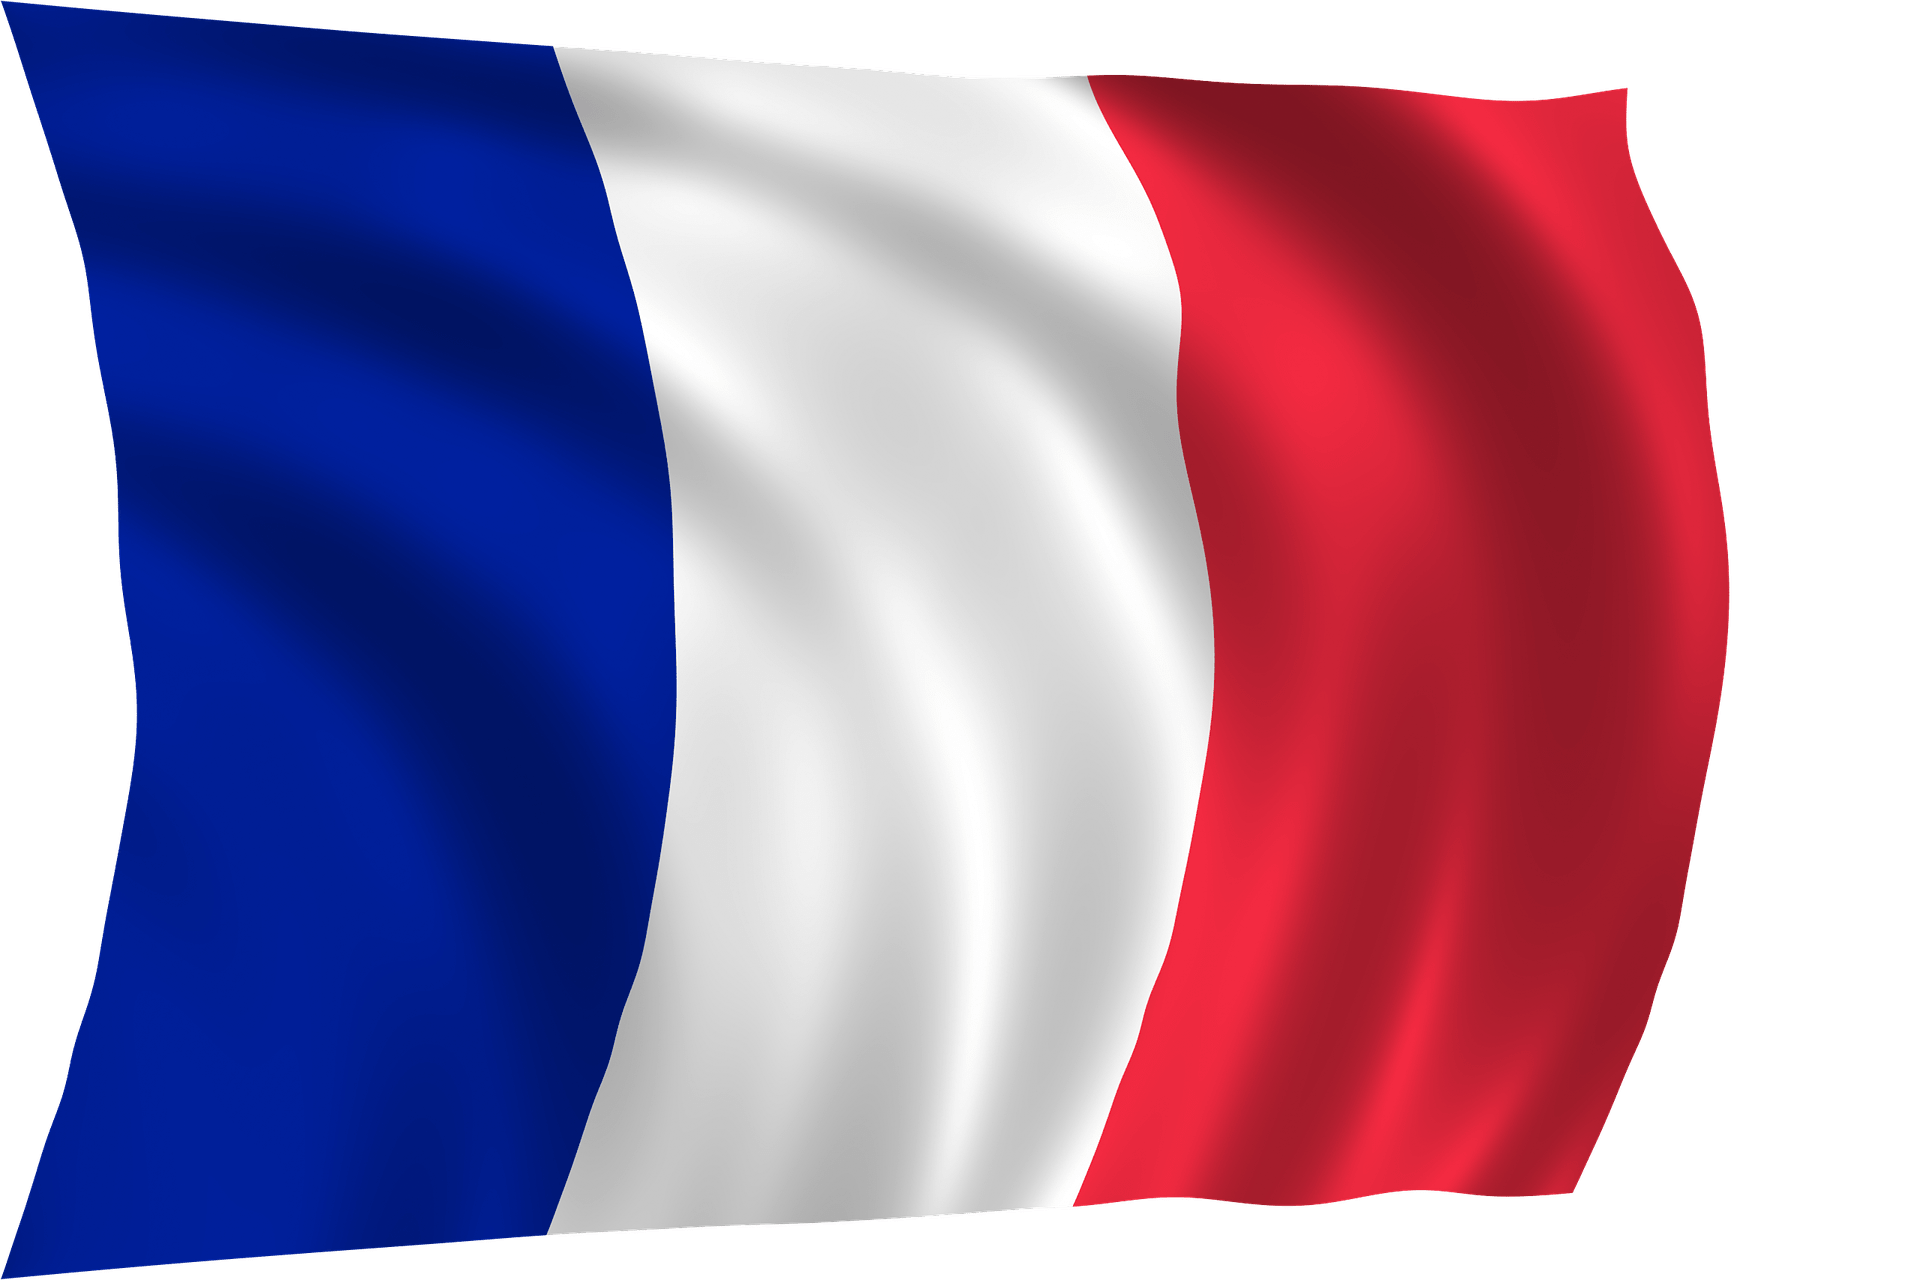 Bienvenue France – Welcome France